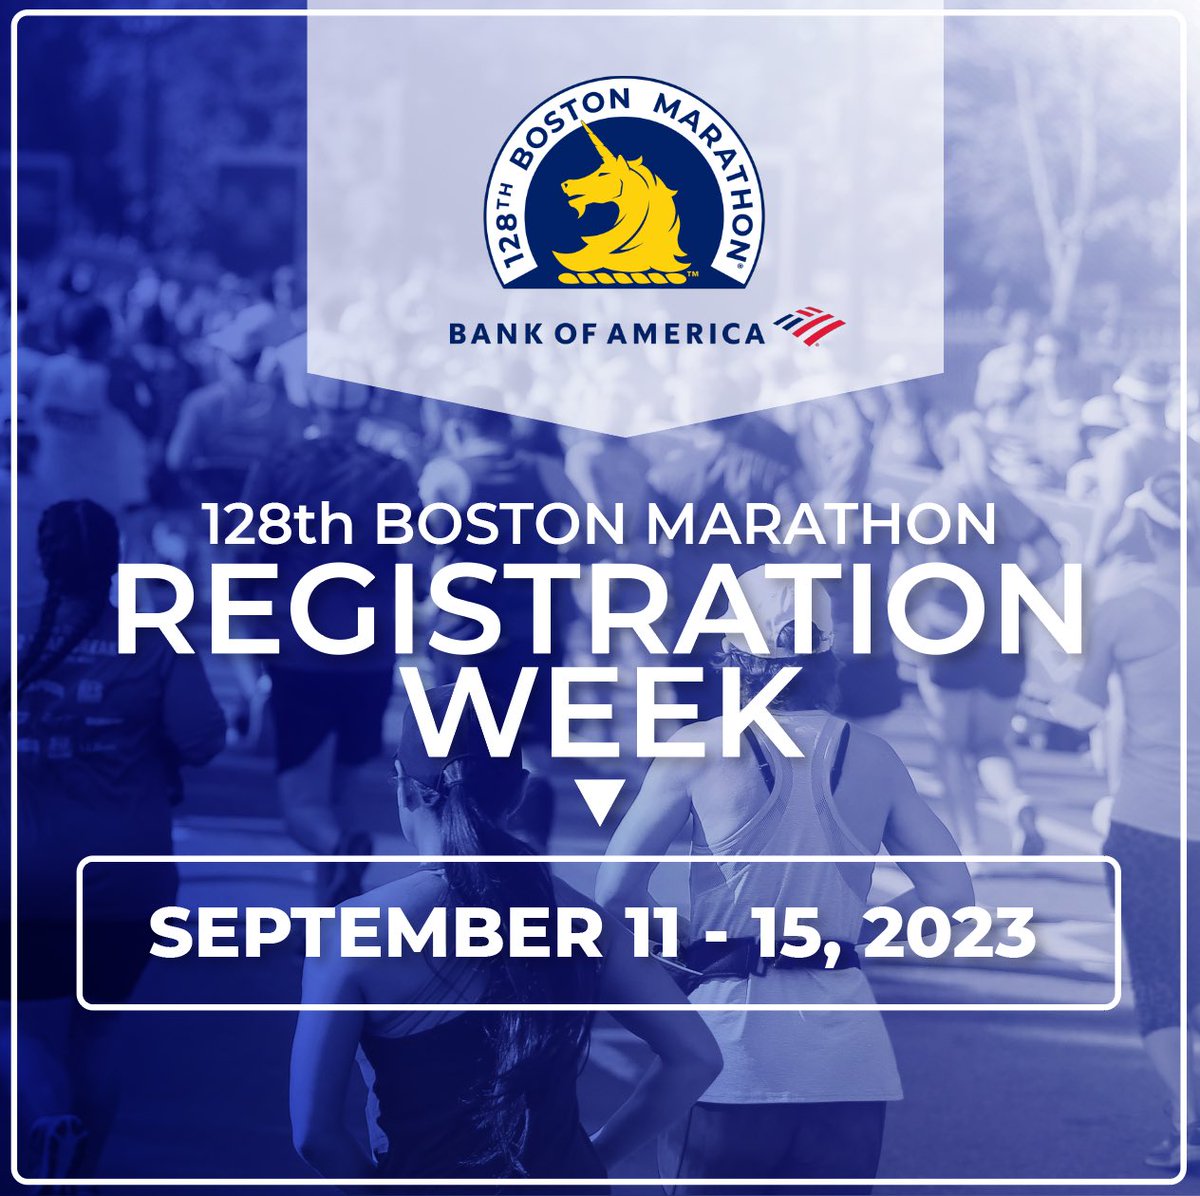 Mark Your Calendars! Registration Week for the 2024 #BostonMarathon presented by @BankofAmerica will be held September 11-15, 2023. 

🦄 Learn more at bstnmar.org/128BMRegWeek 

#Boston128